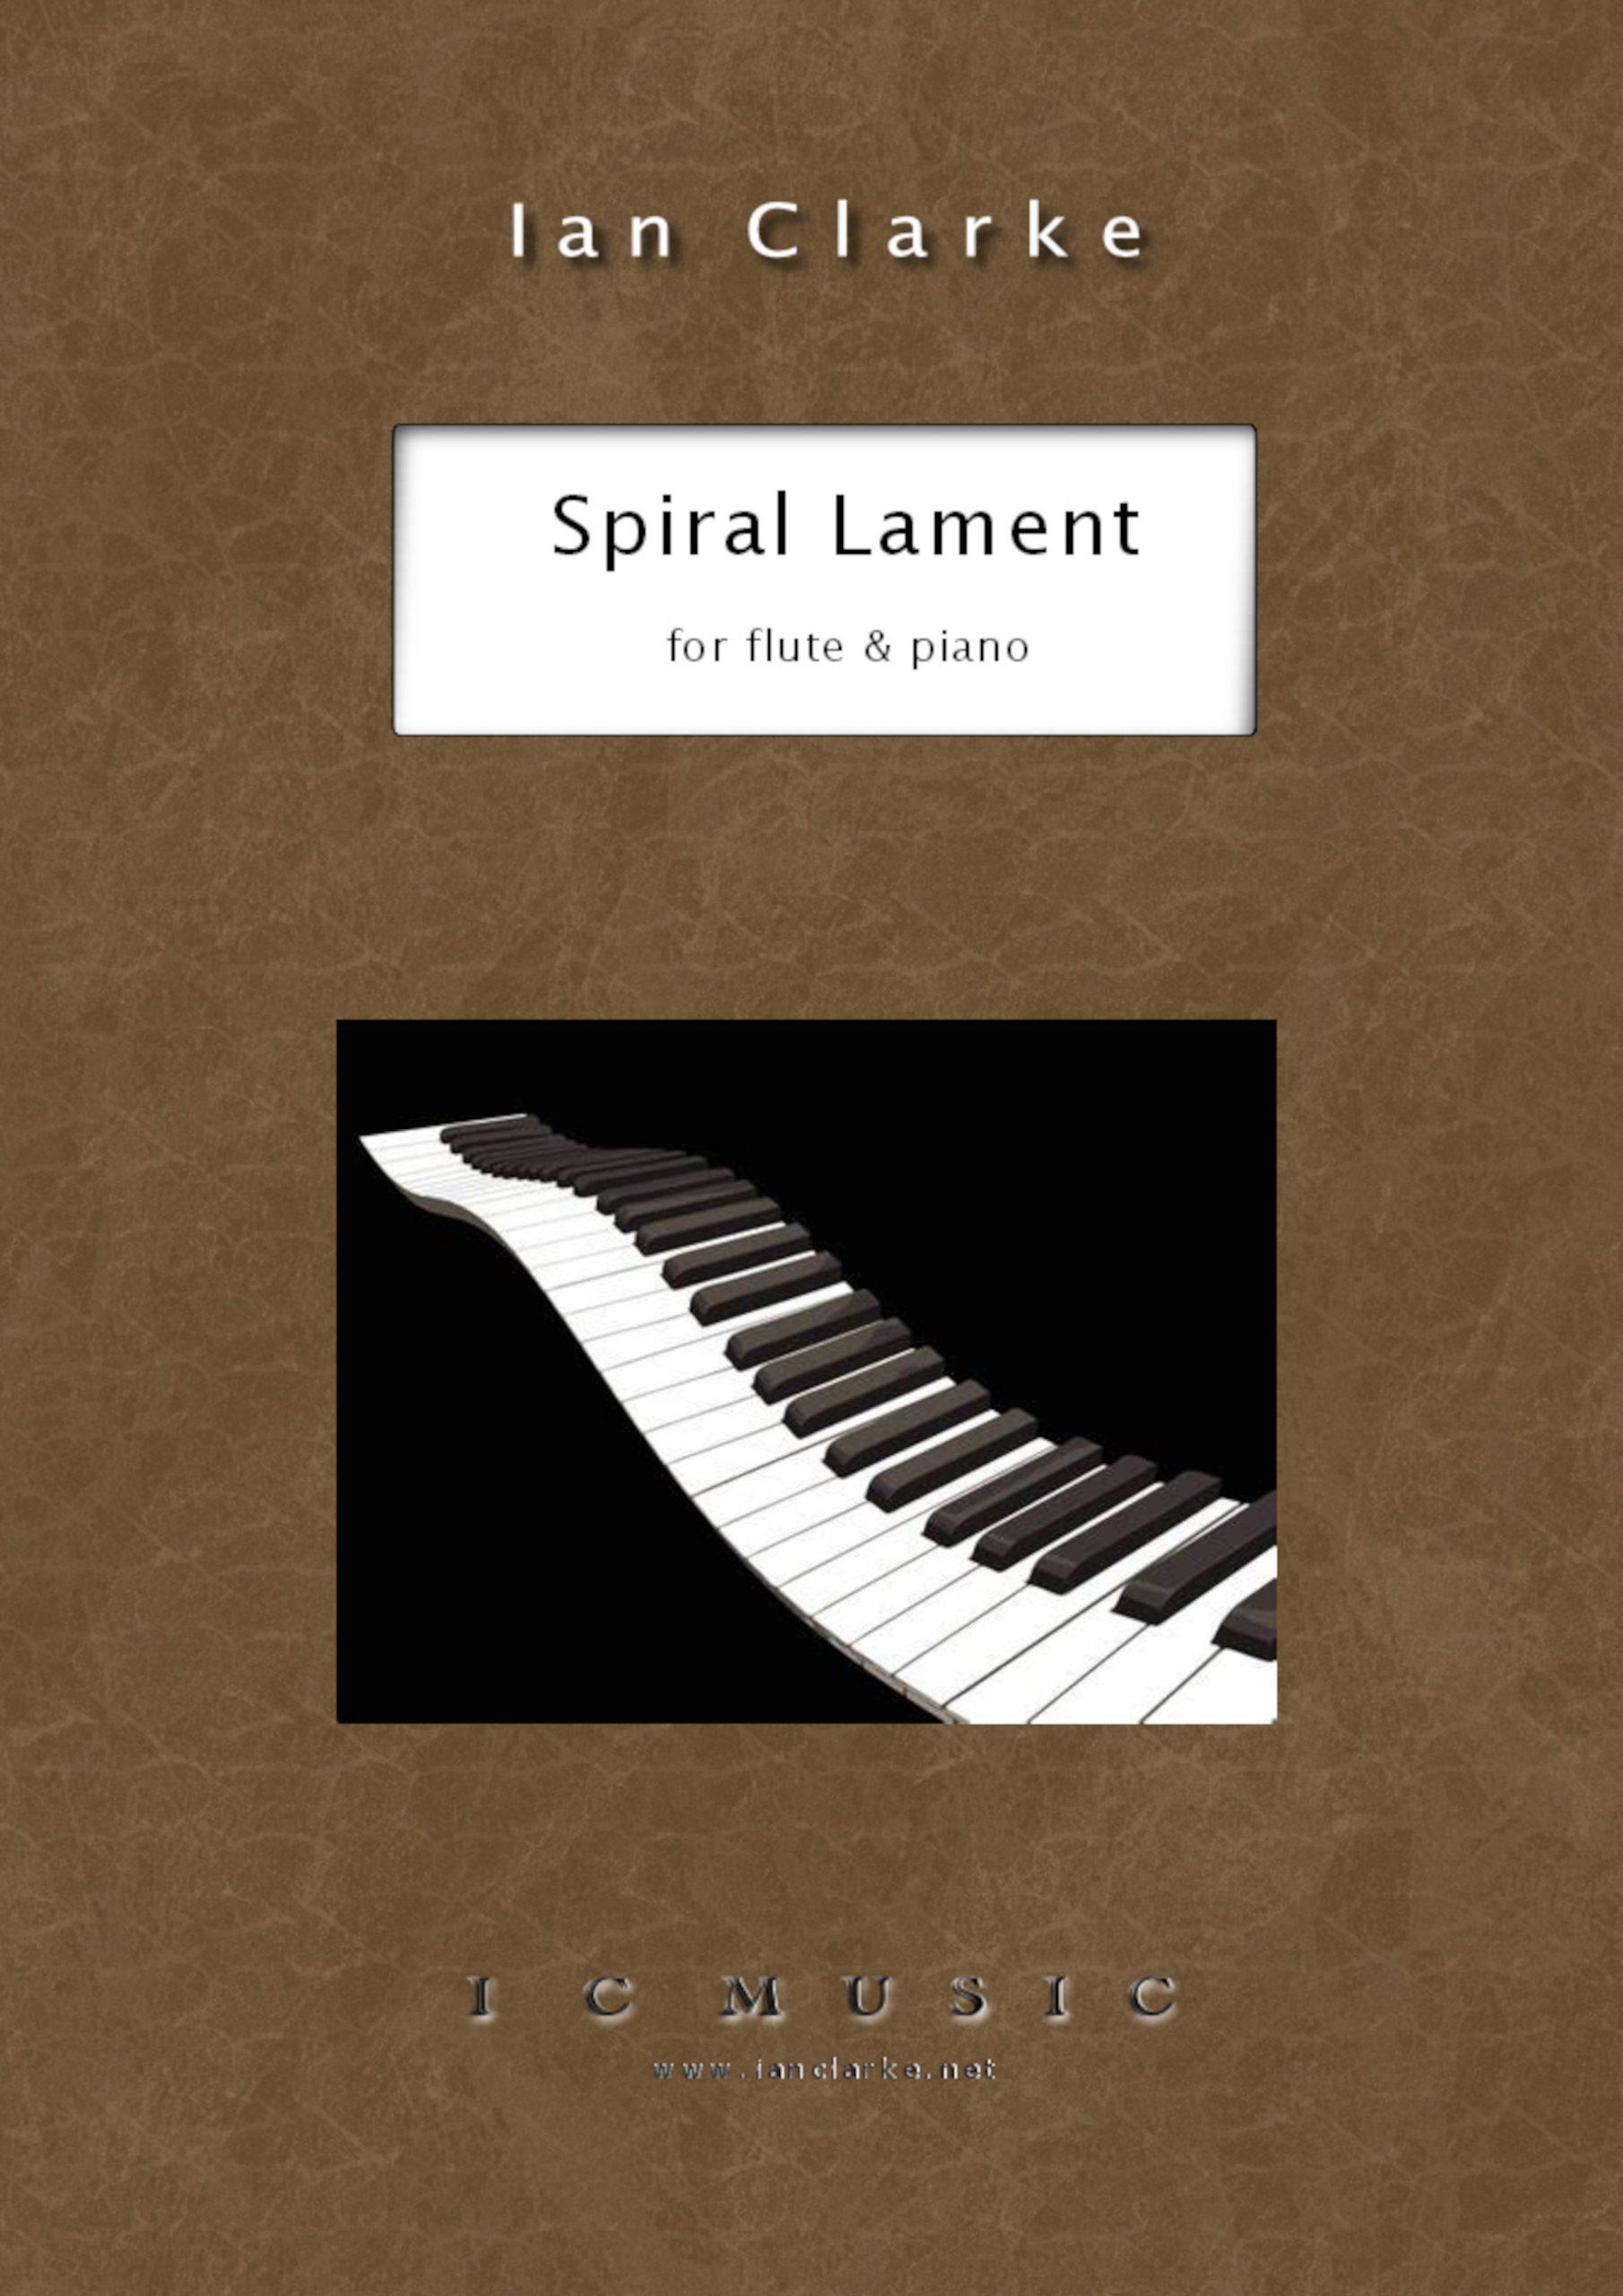 Spiral Lament - Ian Clarke | Suono Flauti